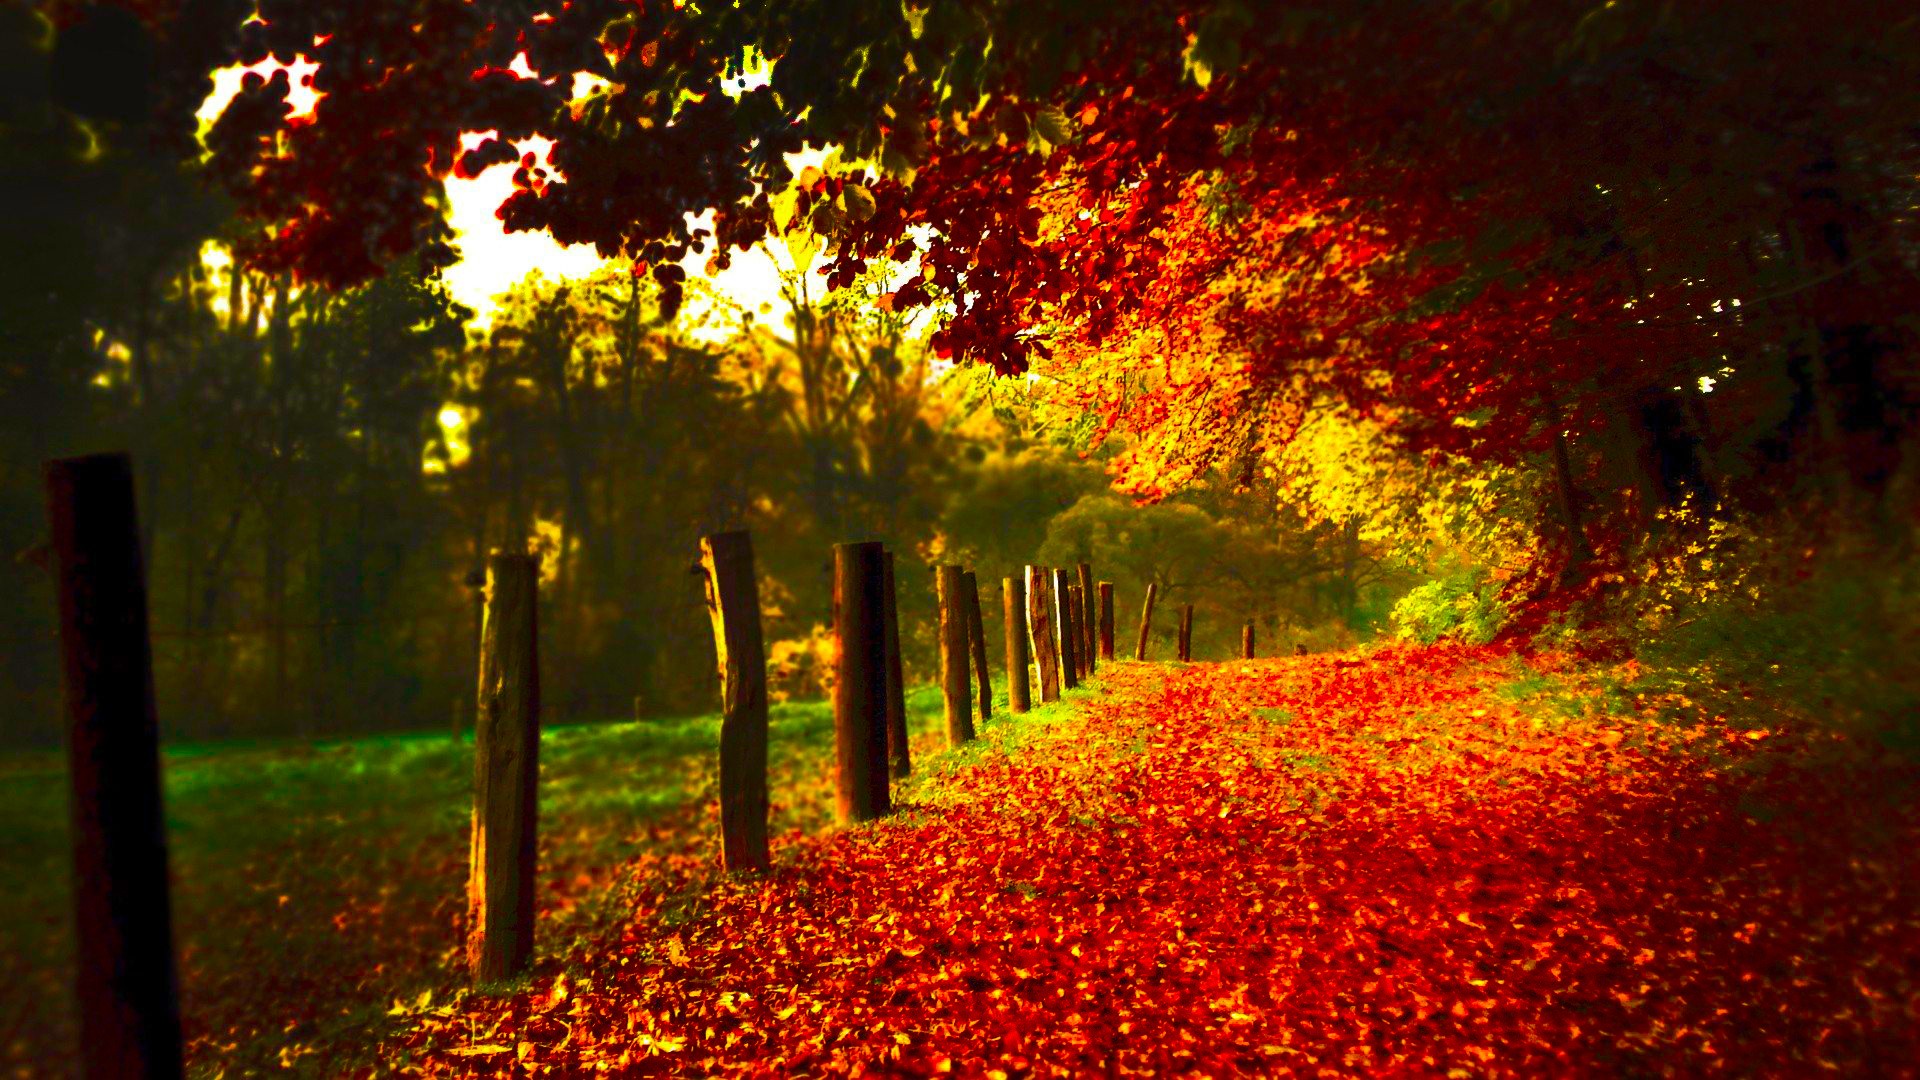 Autumn Scenery Wallpaper HD Jpg